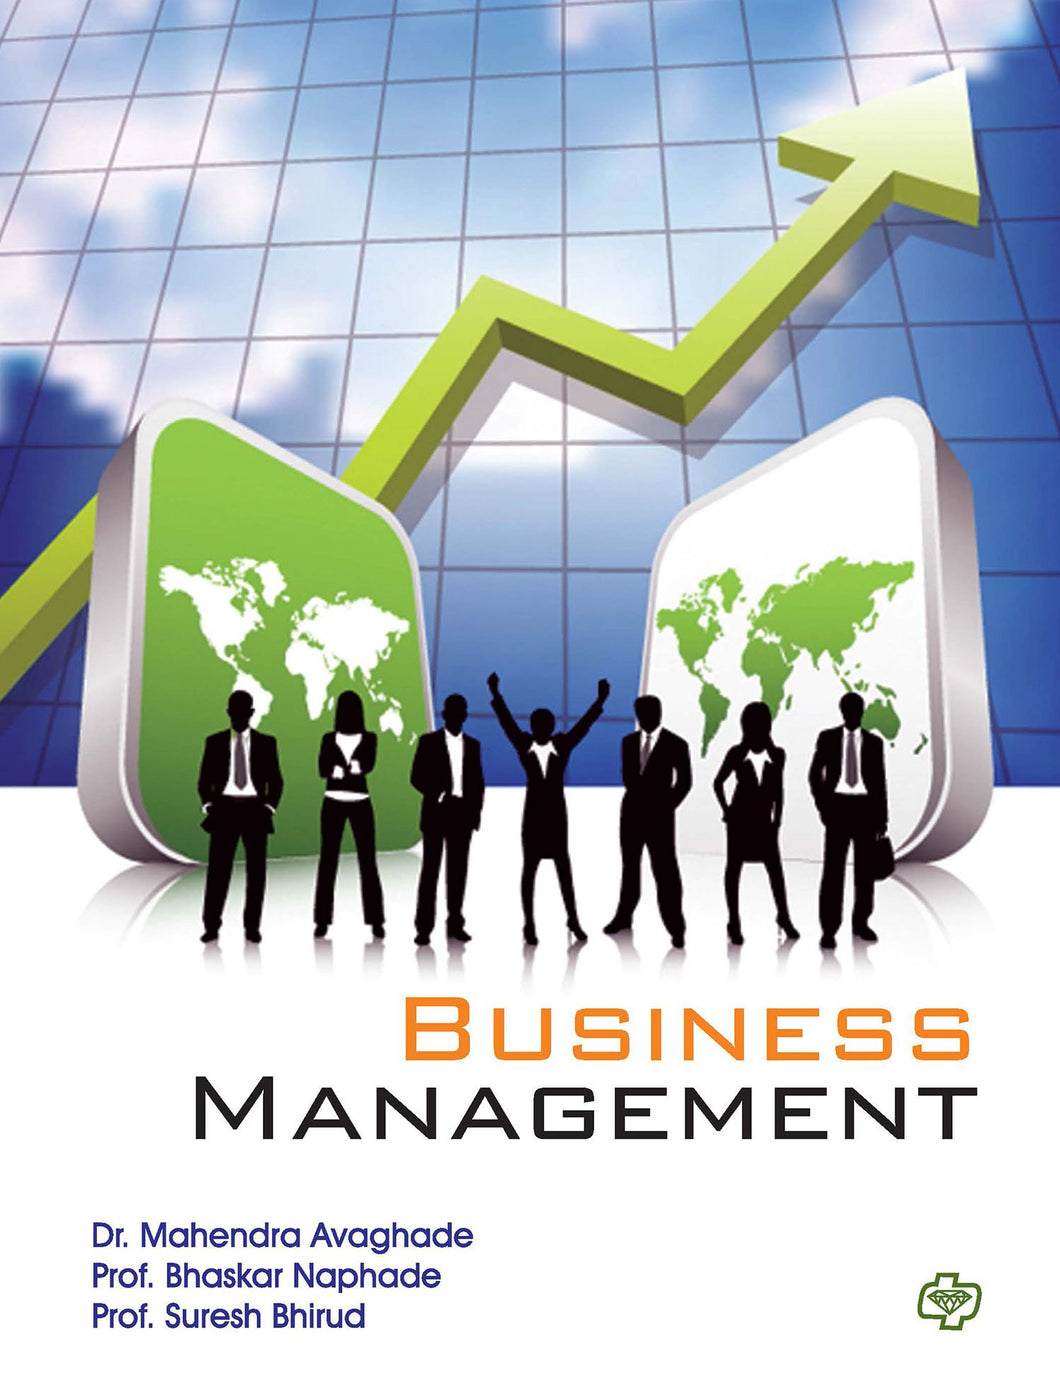 Business Management 